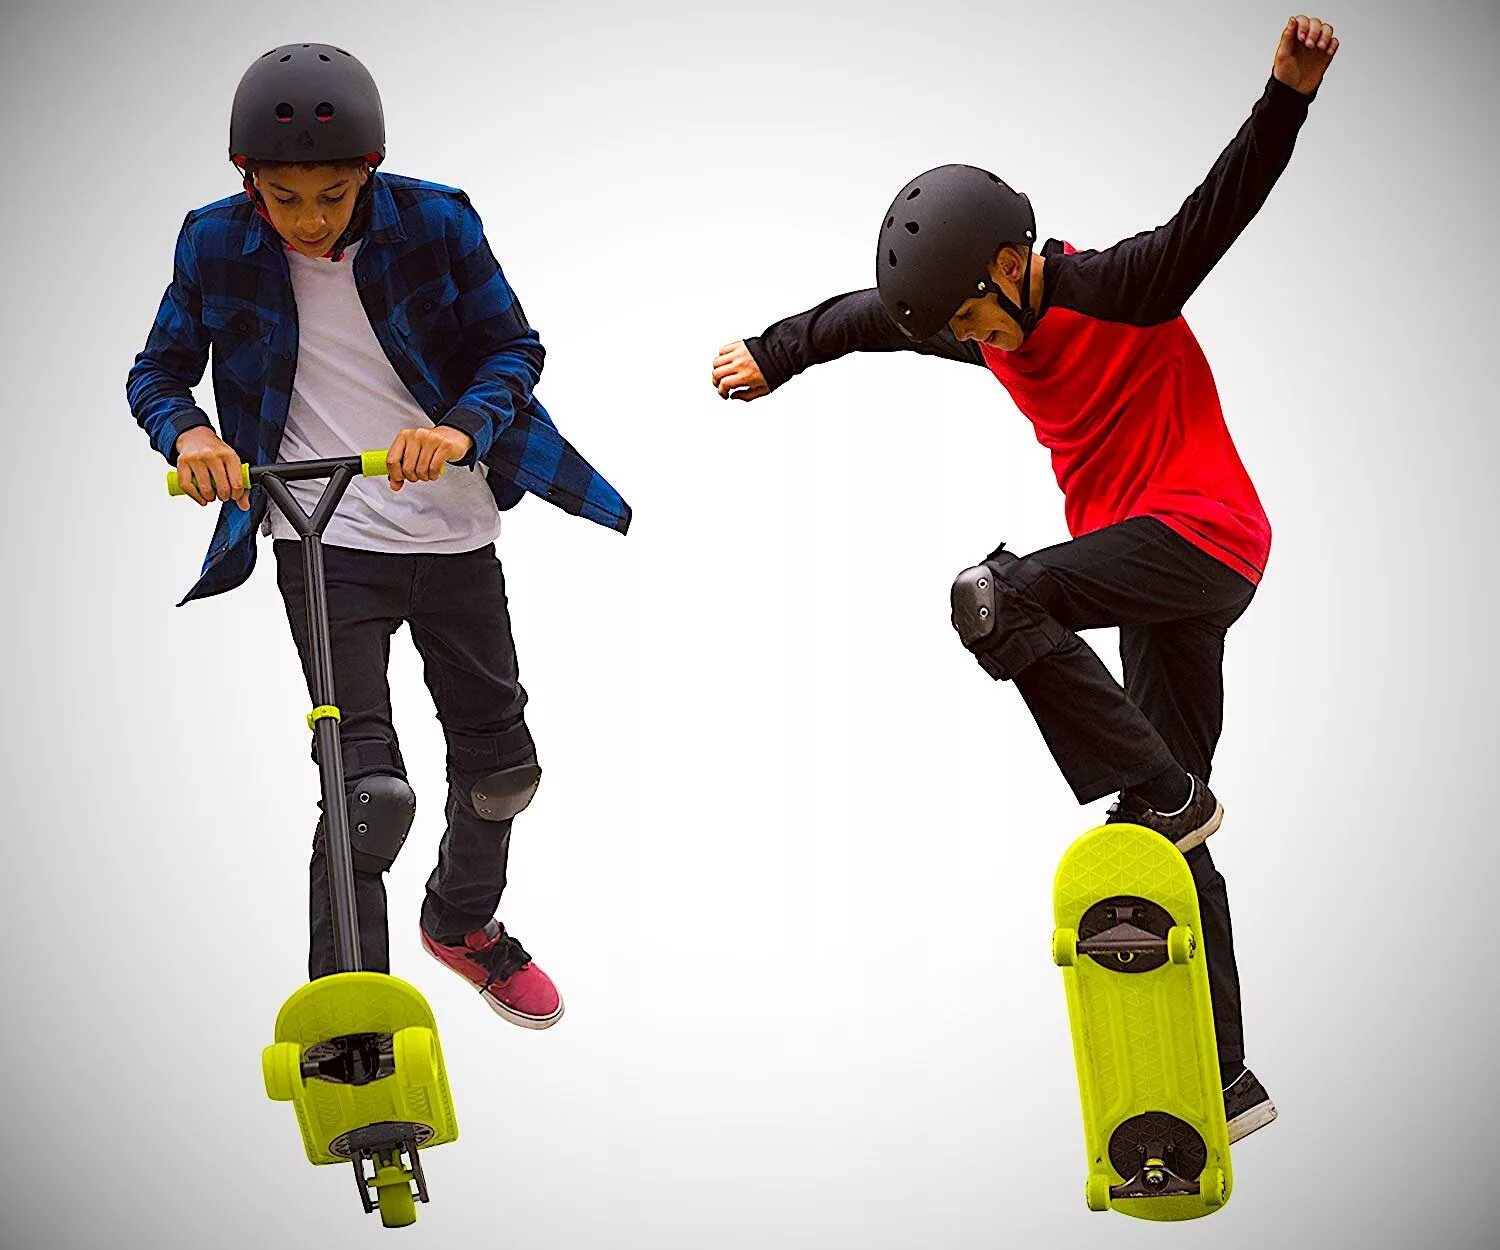 Skate bike. Скейтборд скутер MORFBOARD Skate & Scoot. Самокат трюковой детский Skate. Самокат ролики скейтборд. Мальчик на самокате.